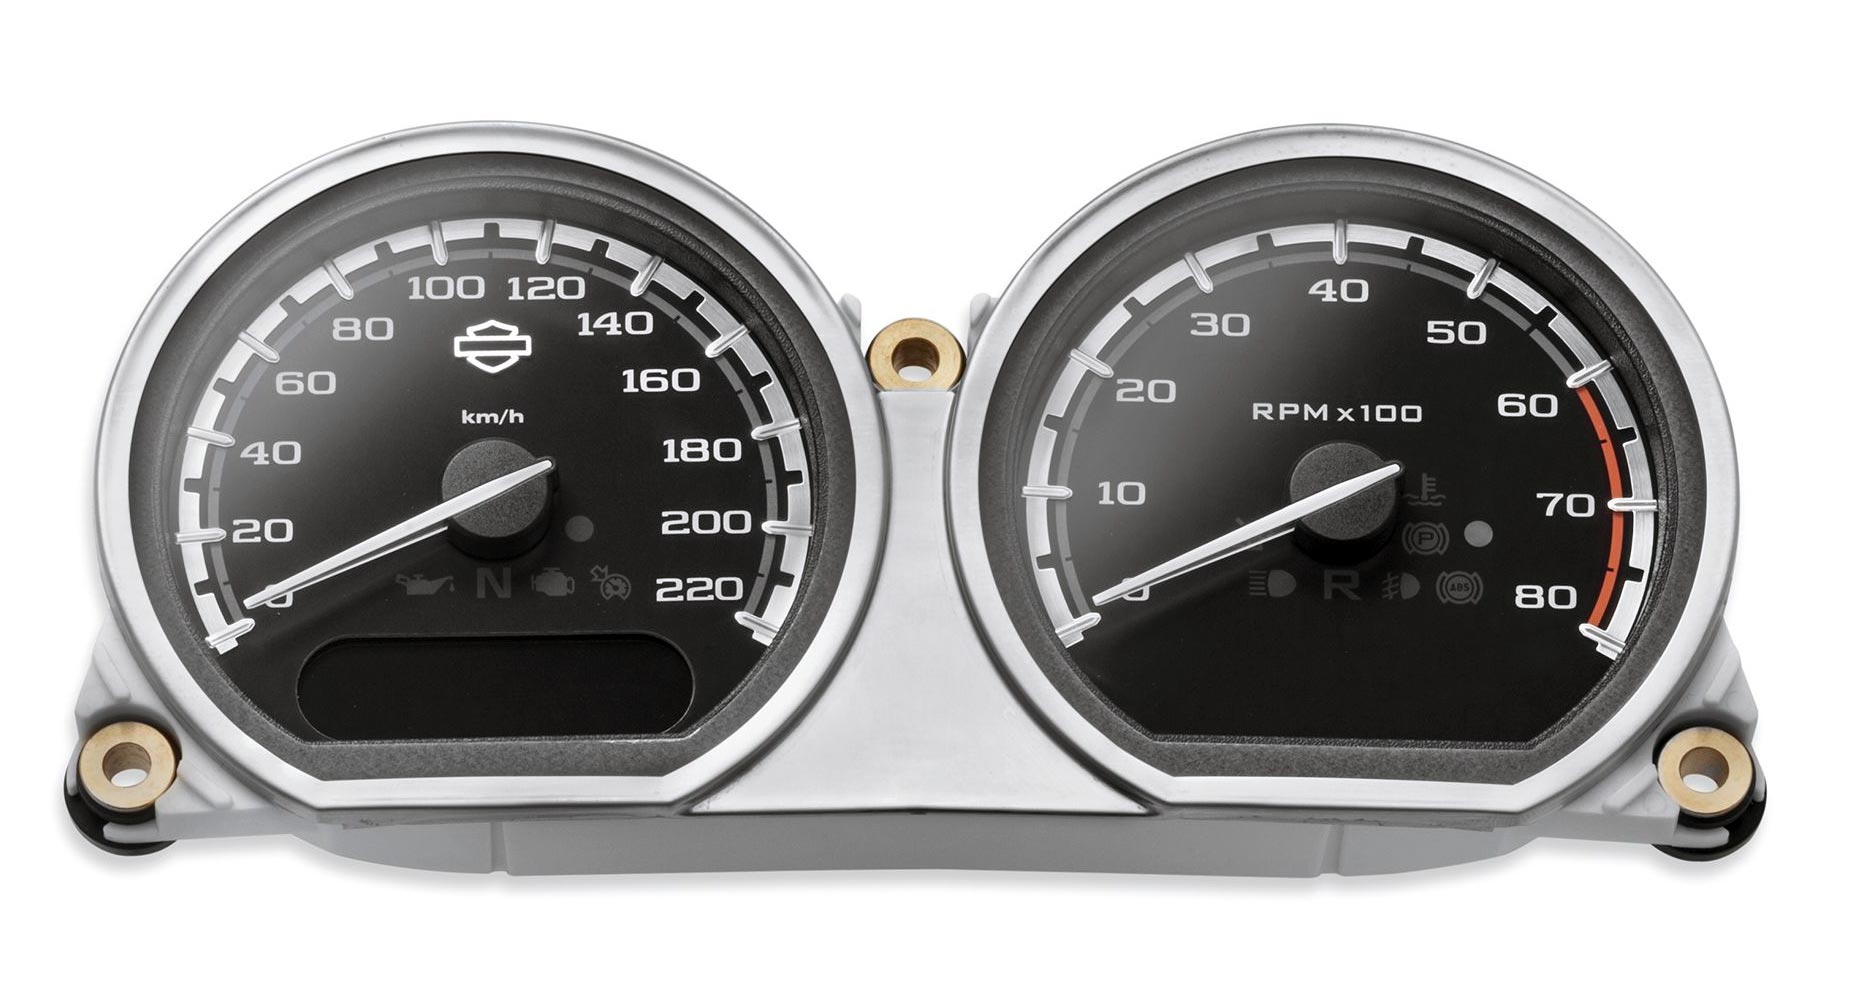 Individual dials for Harley Davidson - Heiler-Tachodesign Accessories, 9,99  €